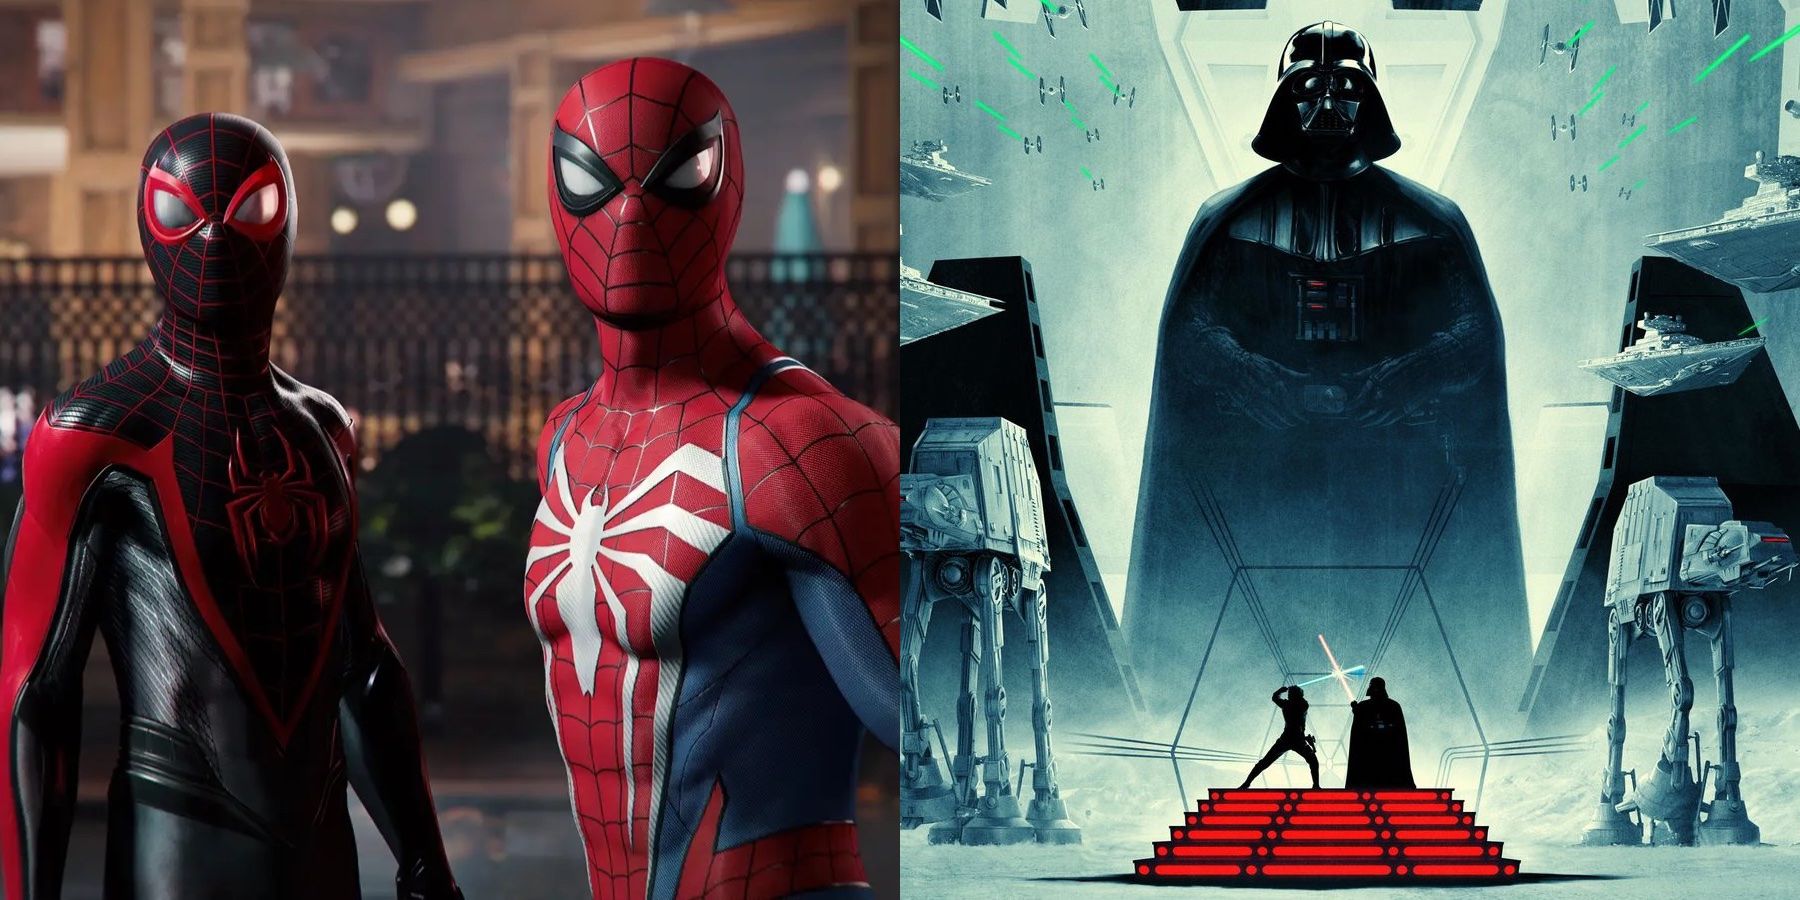 marvels spider-man 2 star wars empire strikes back compared